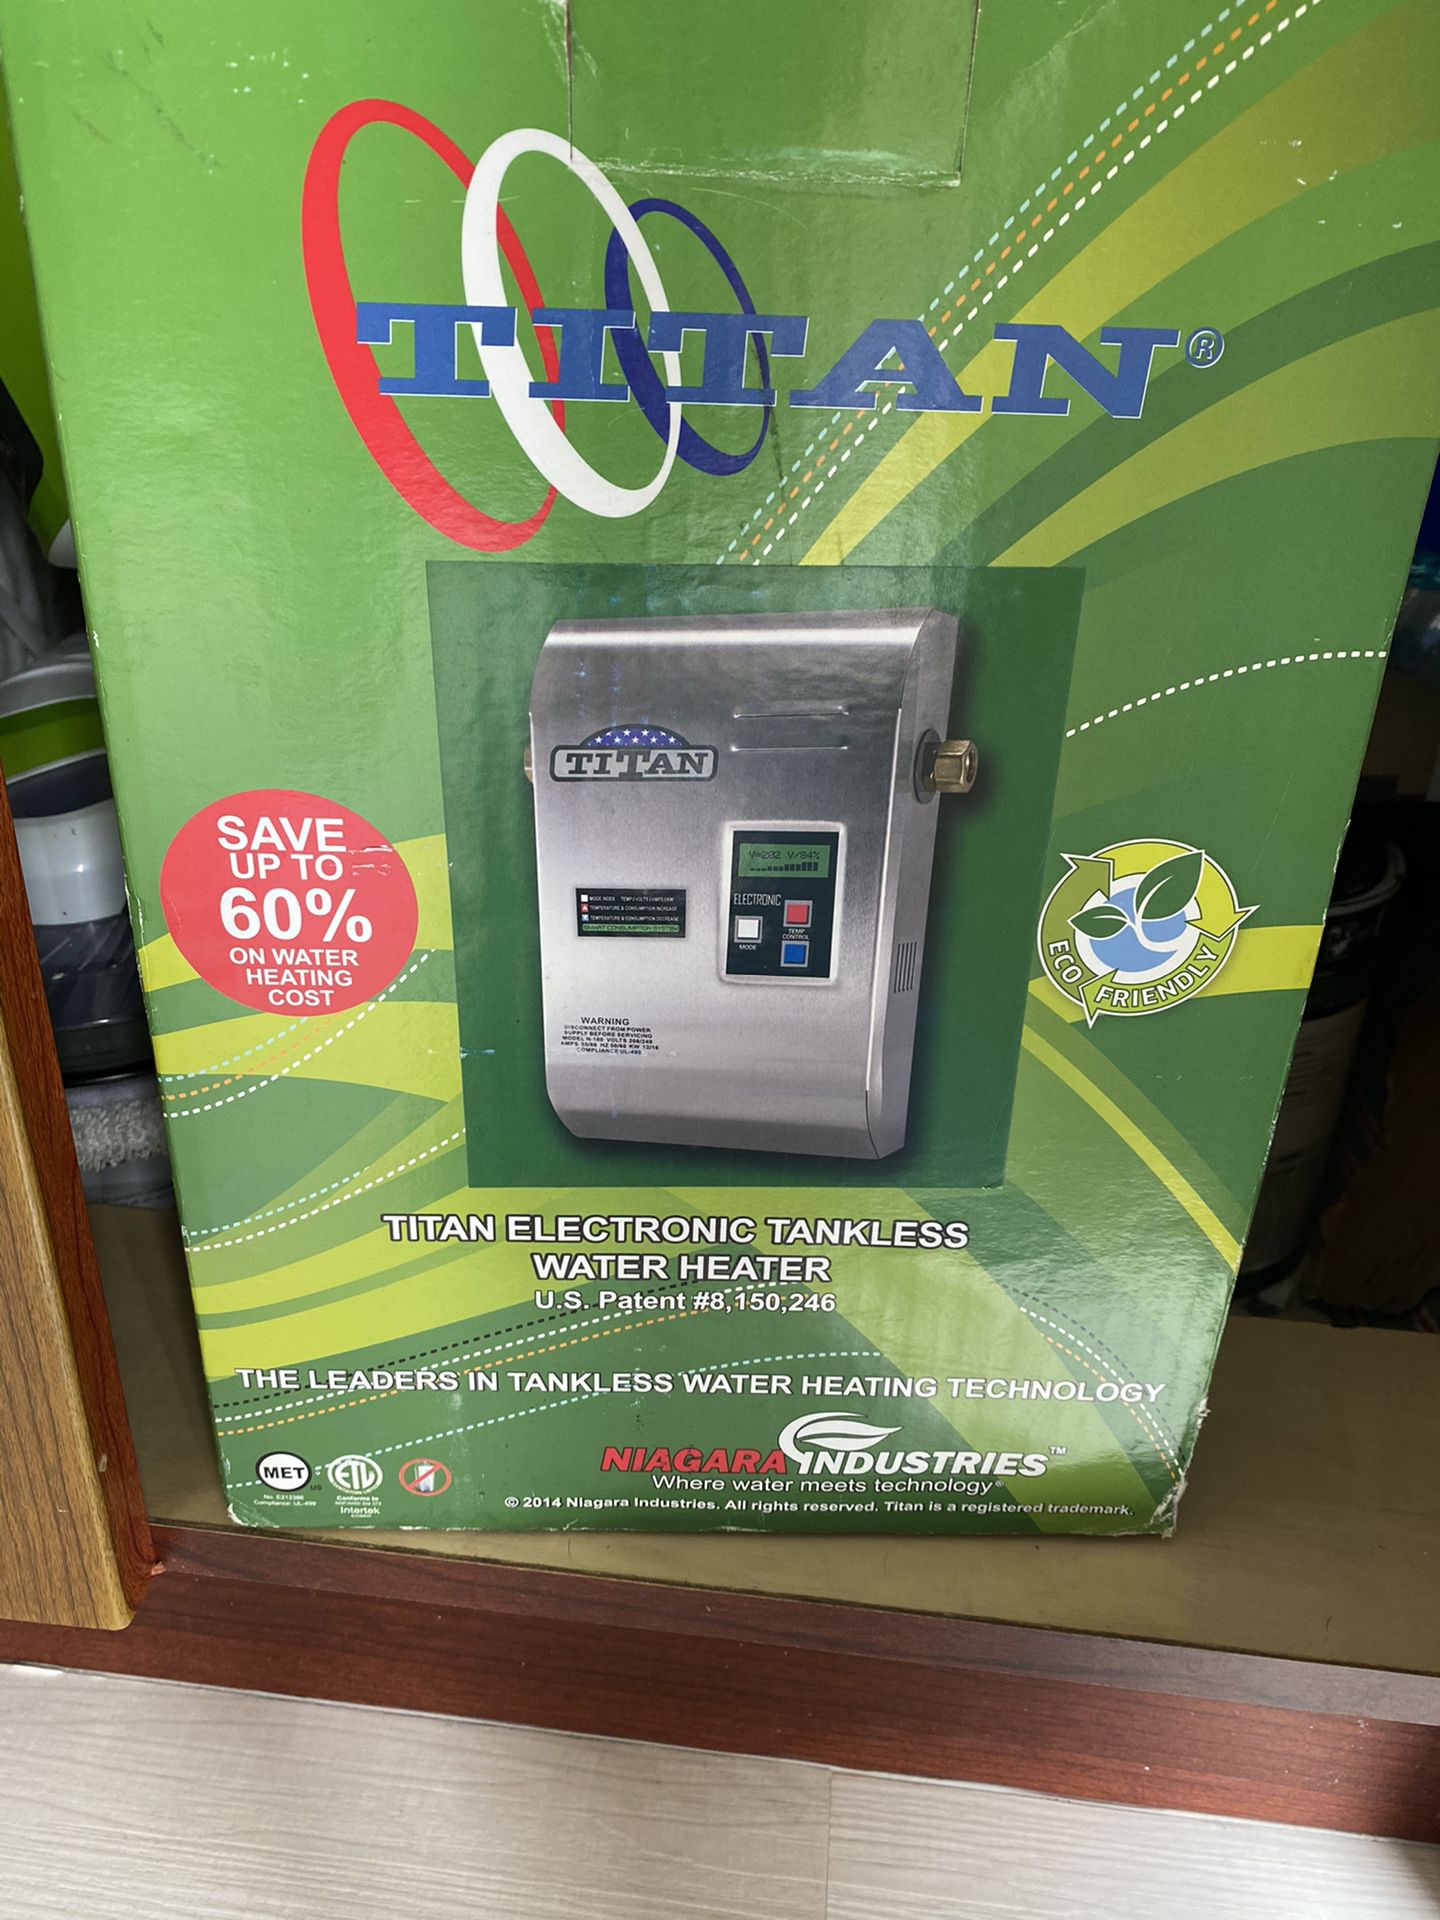 Titan electronic tankless water heater